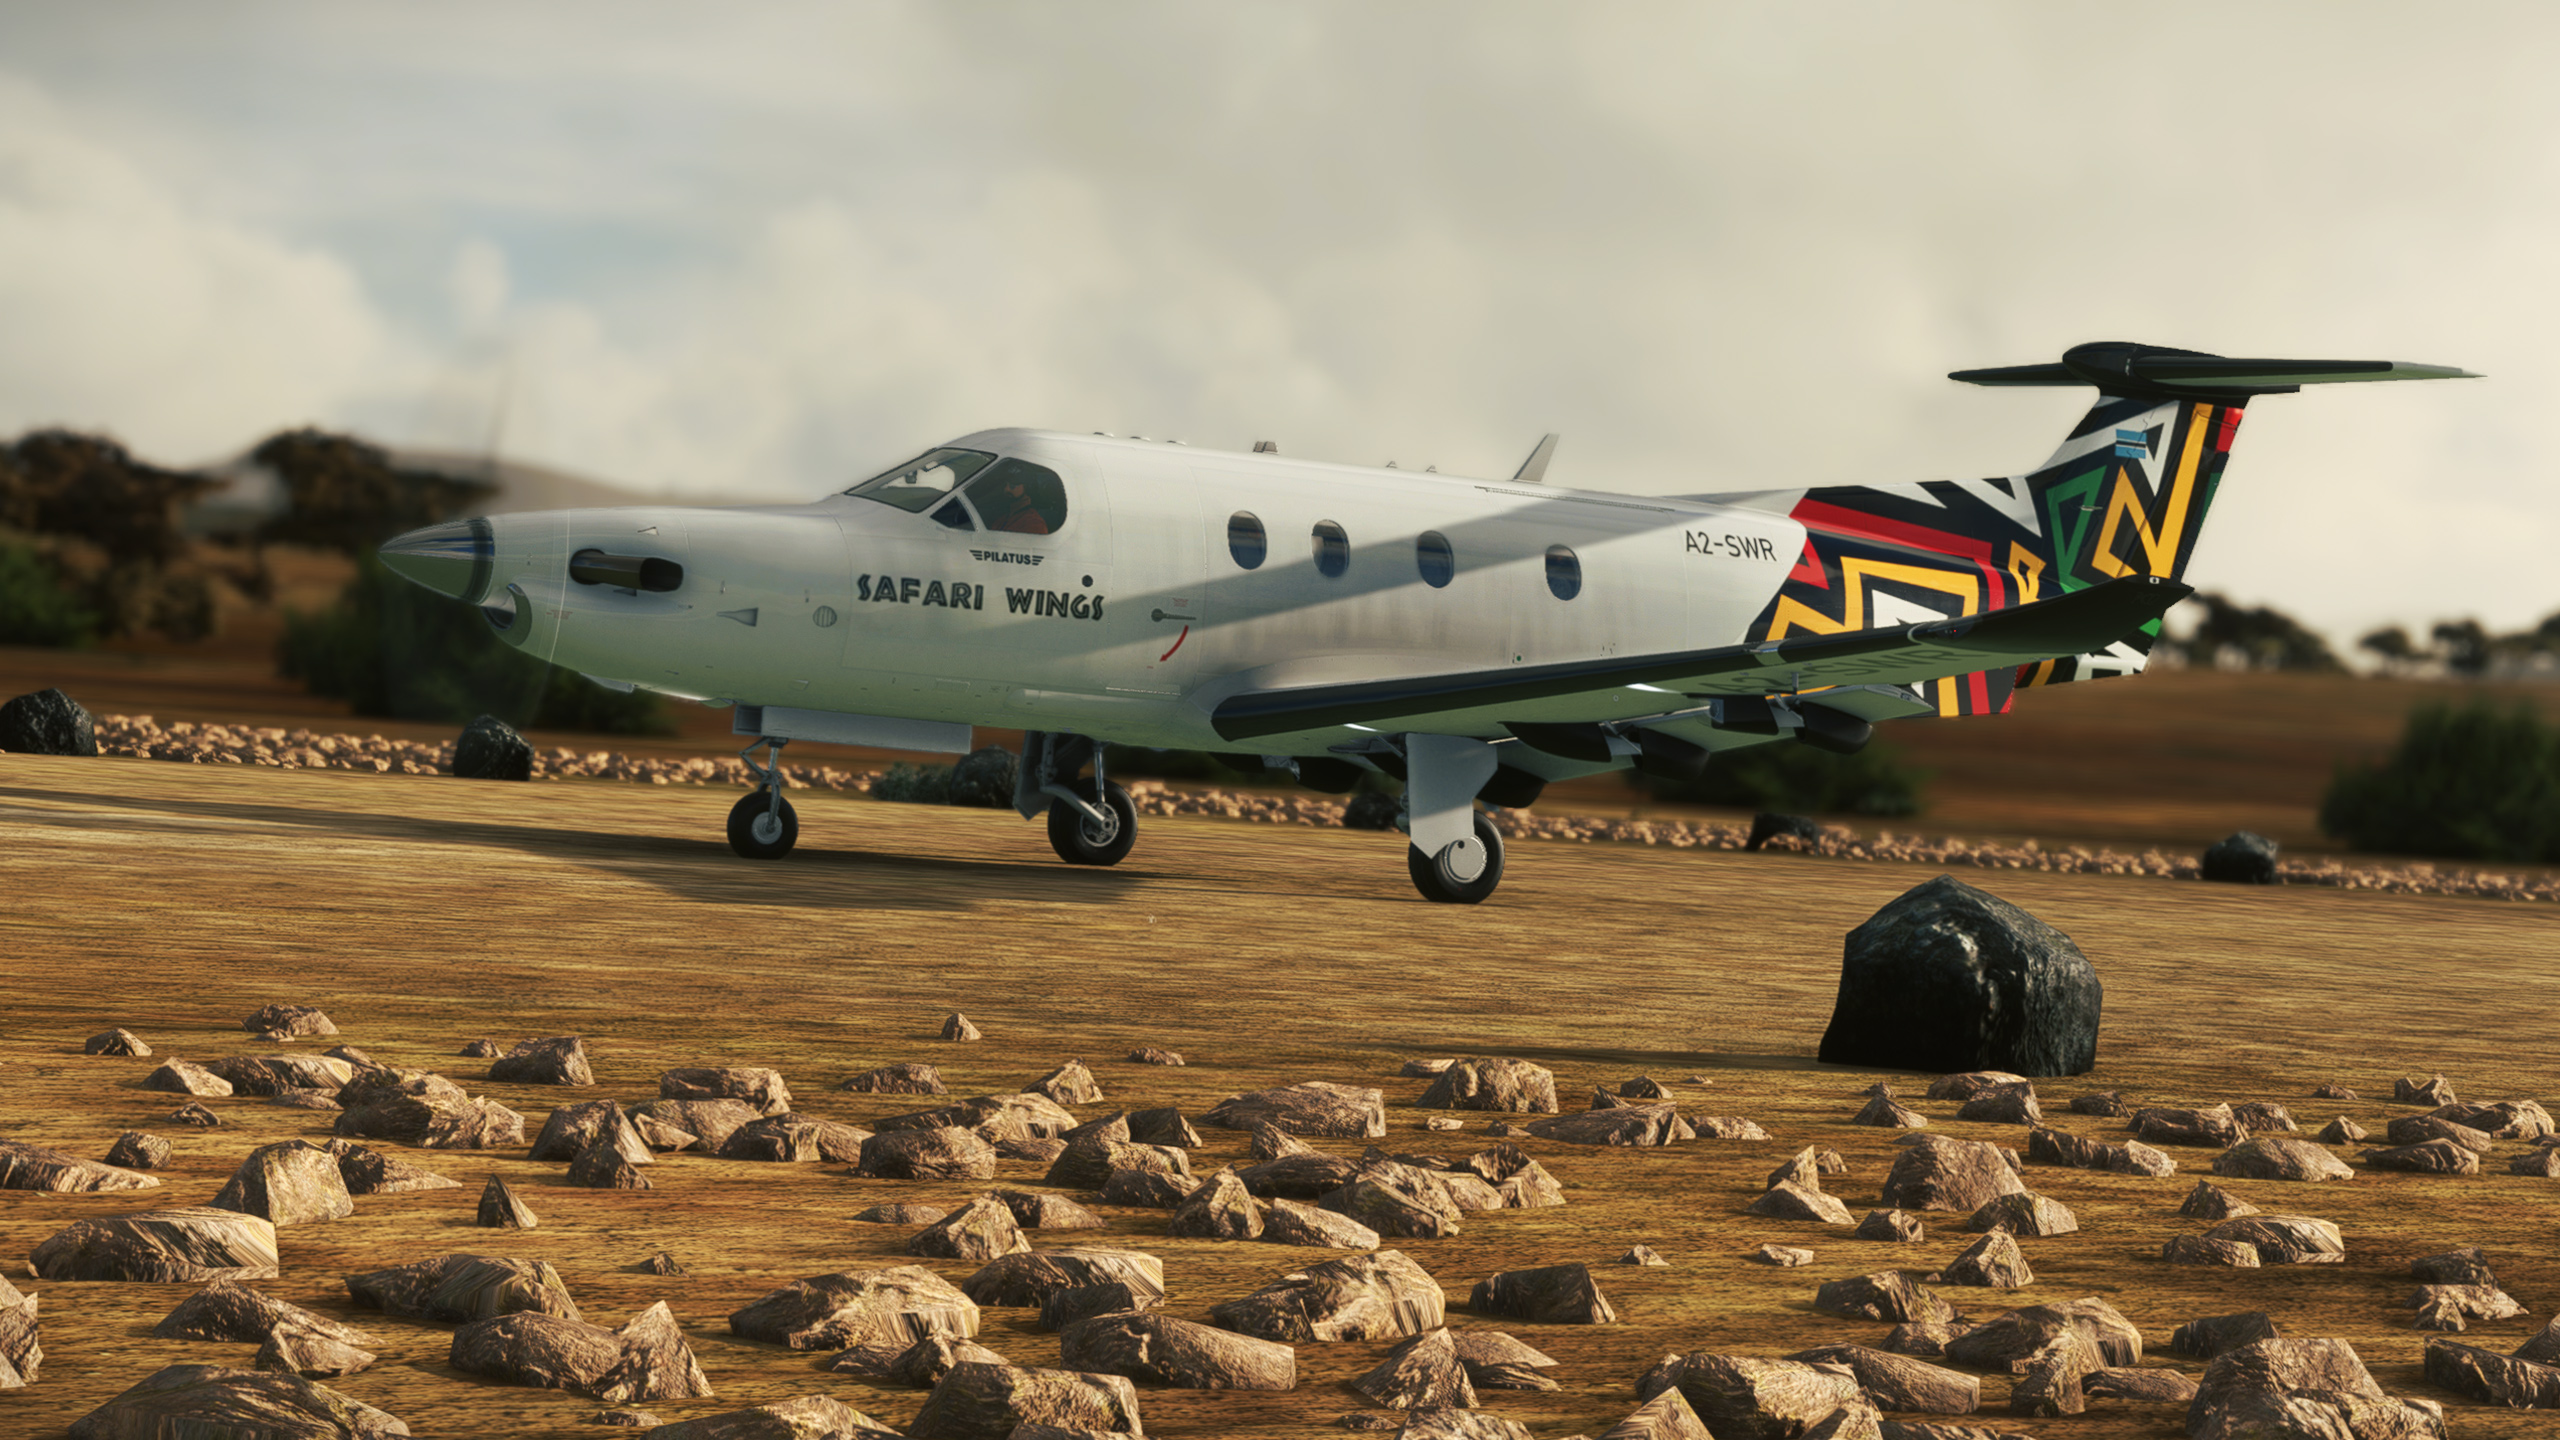 Microsoft Flight Simulator Sim Update 14 & Pilatus PC-12 Released